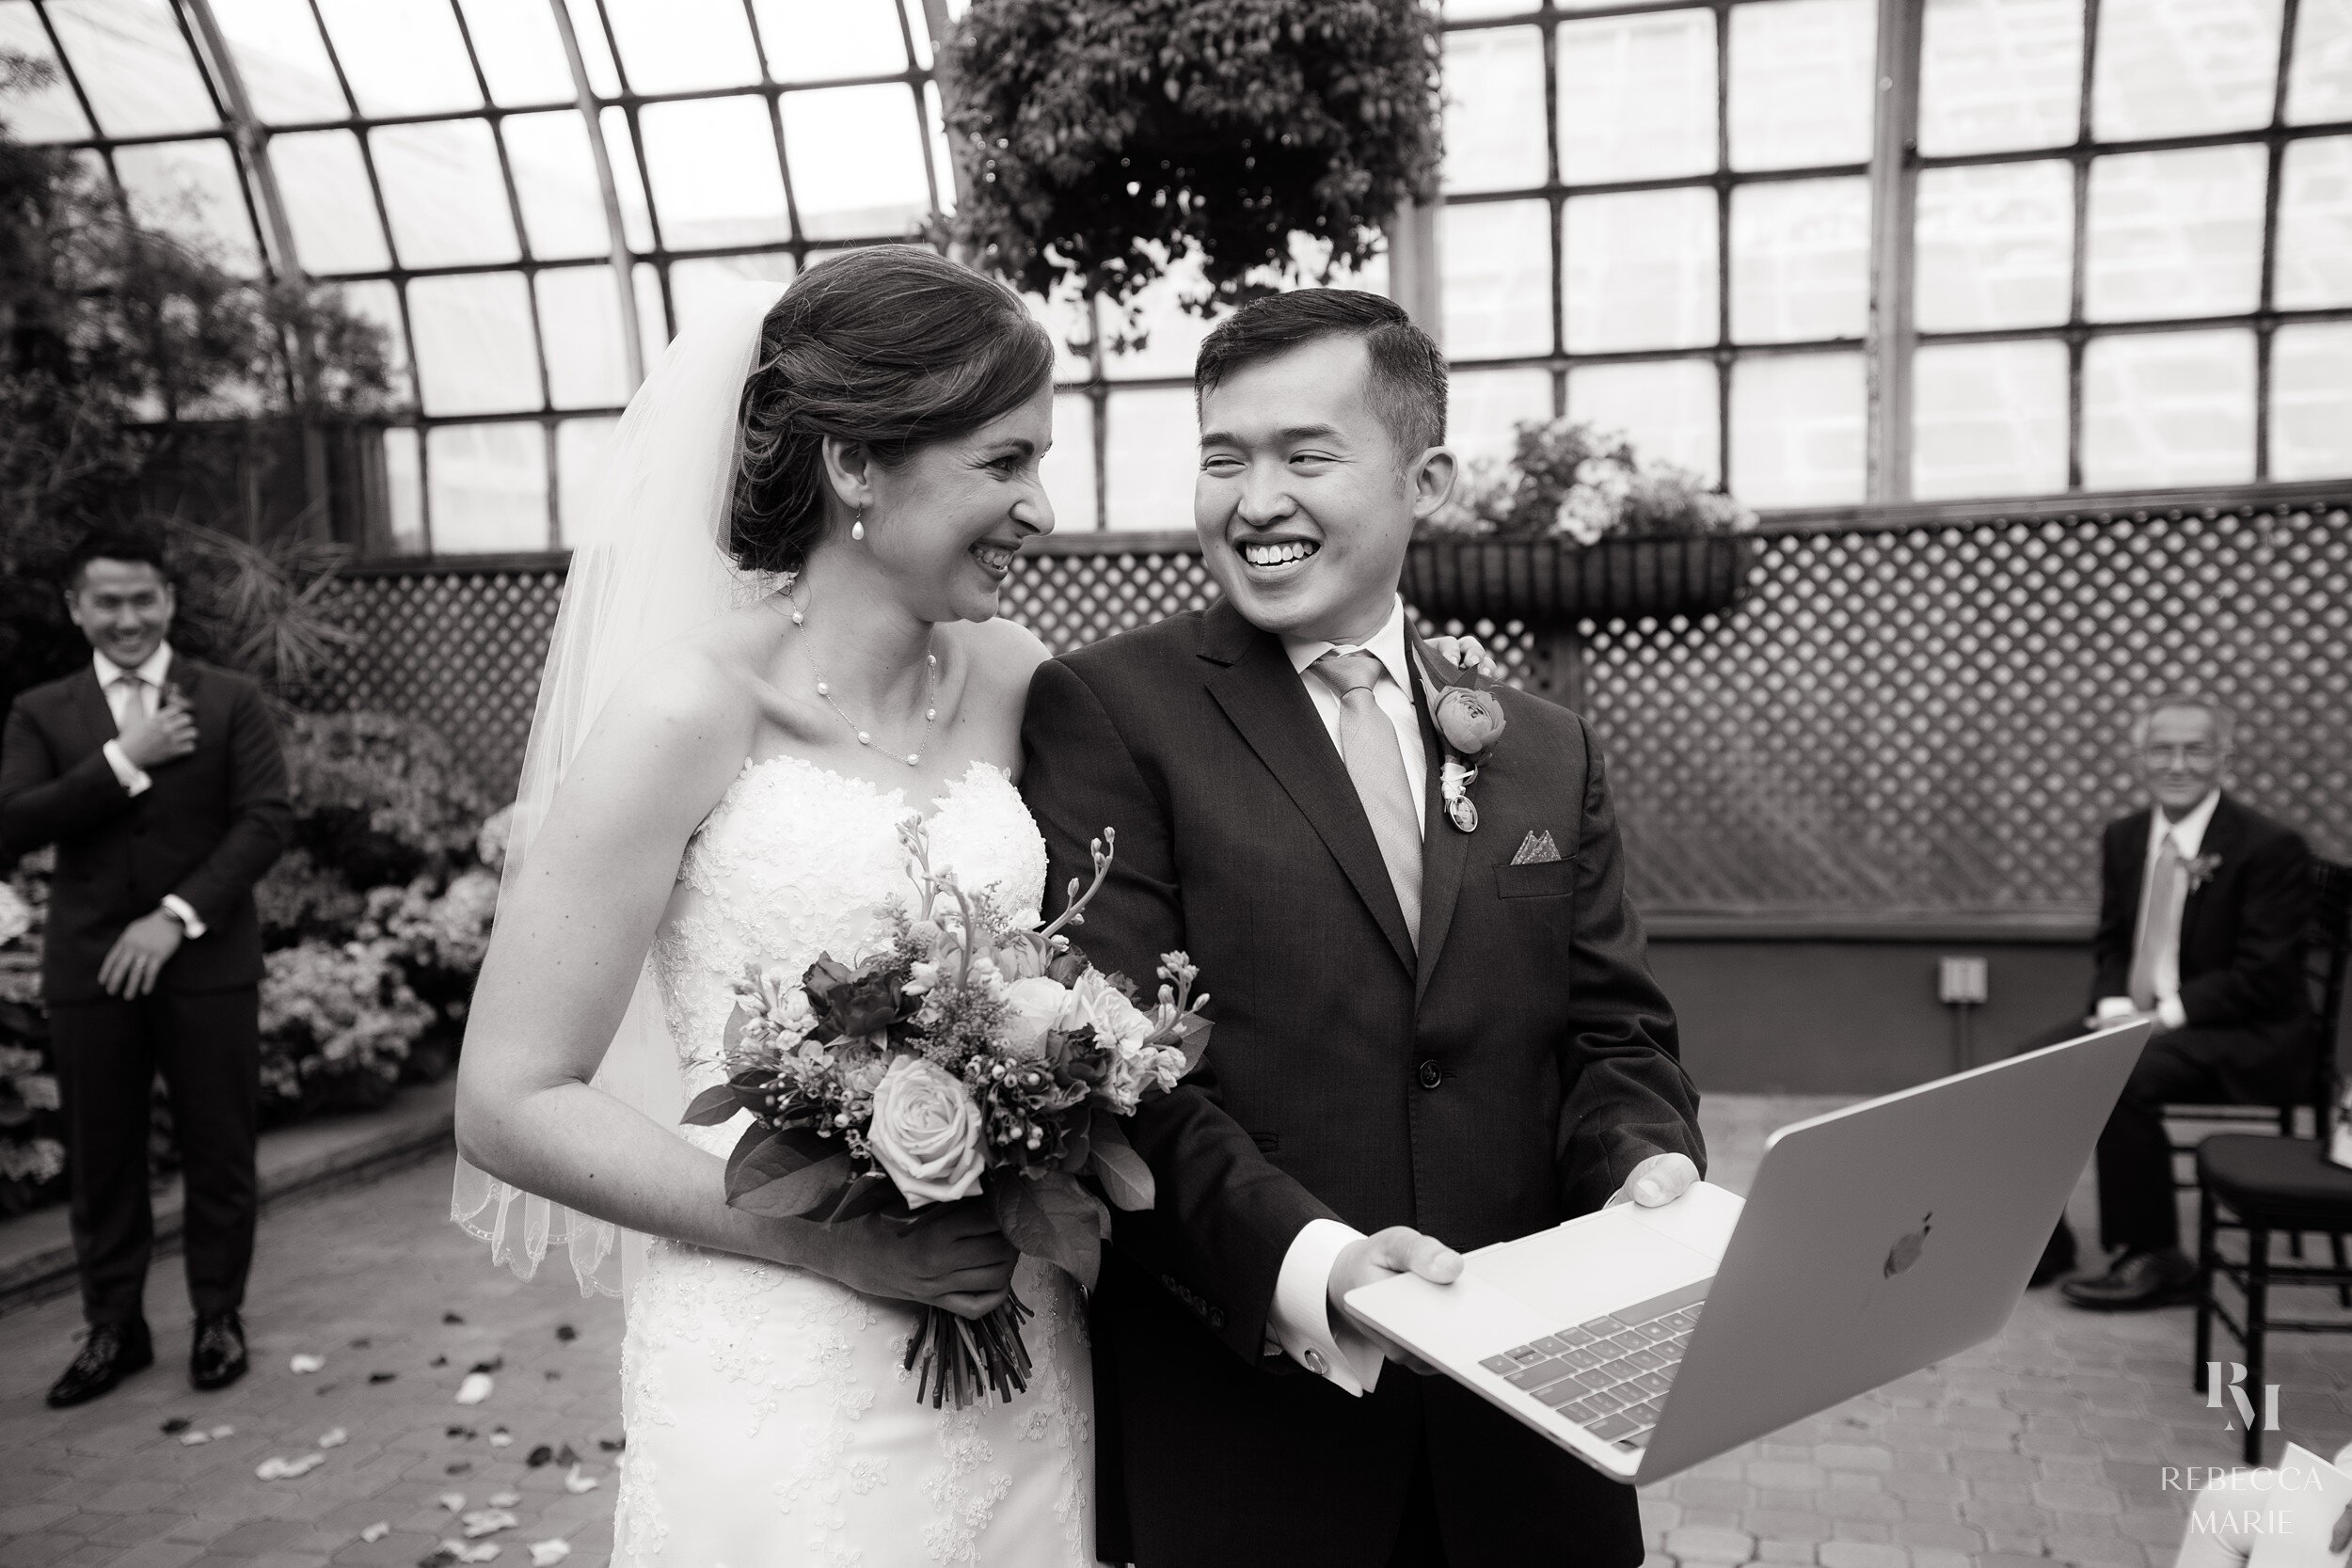 Micro-wedding-Chicago-Rebecca-Marie-Photography